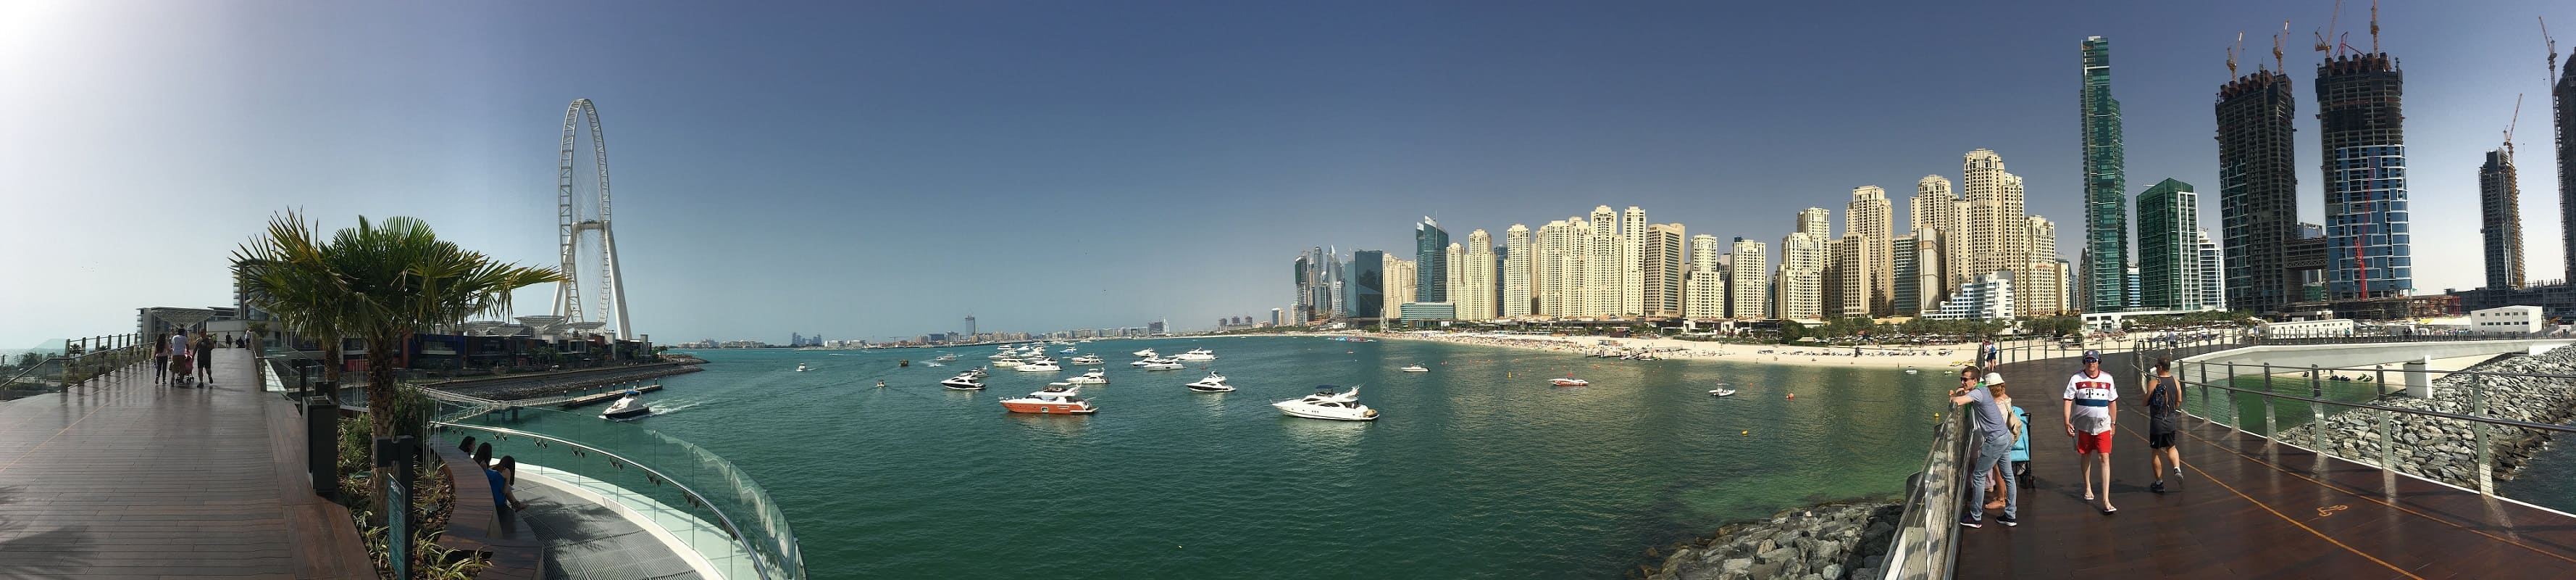 Bluewaters Bay, Dubai 2019